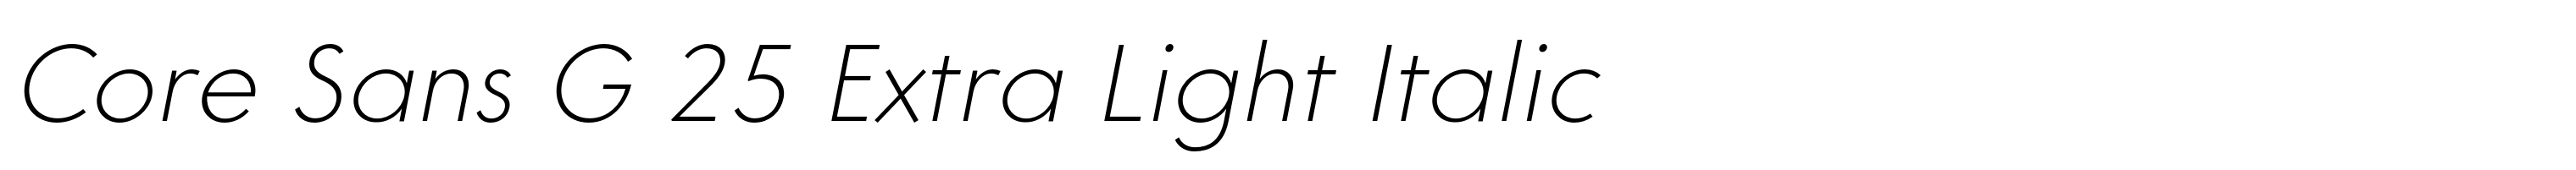 Core Sans G 25 Extra Light Italic